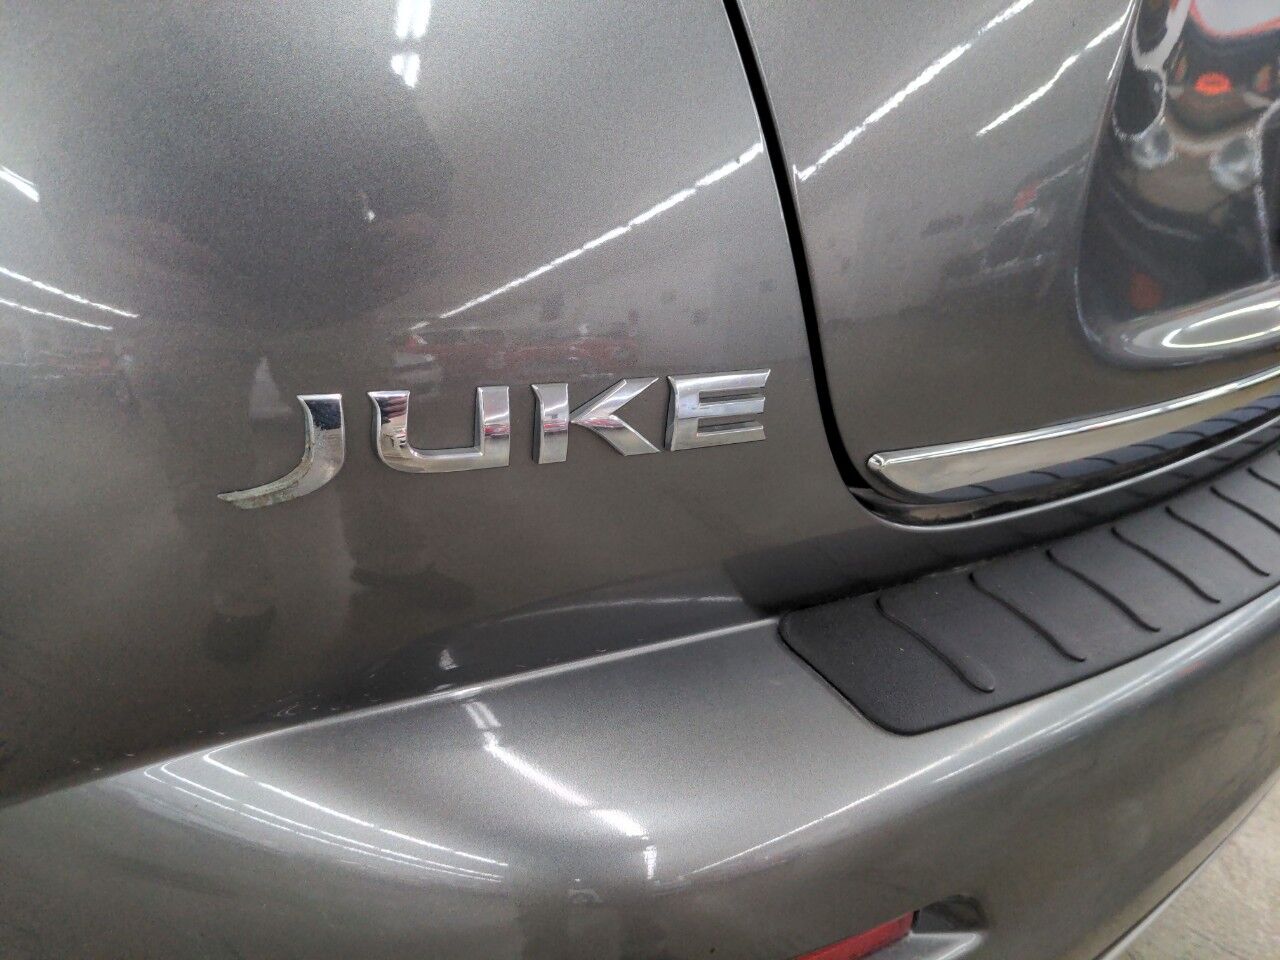 2012 Nissan JUKE S photo